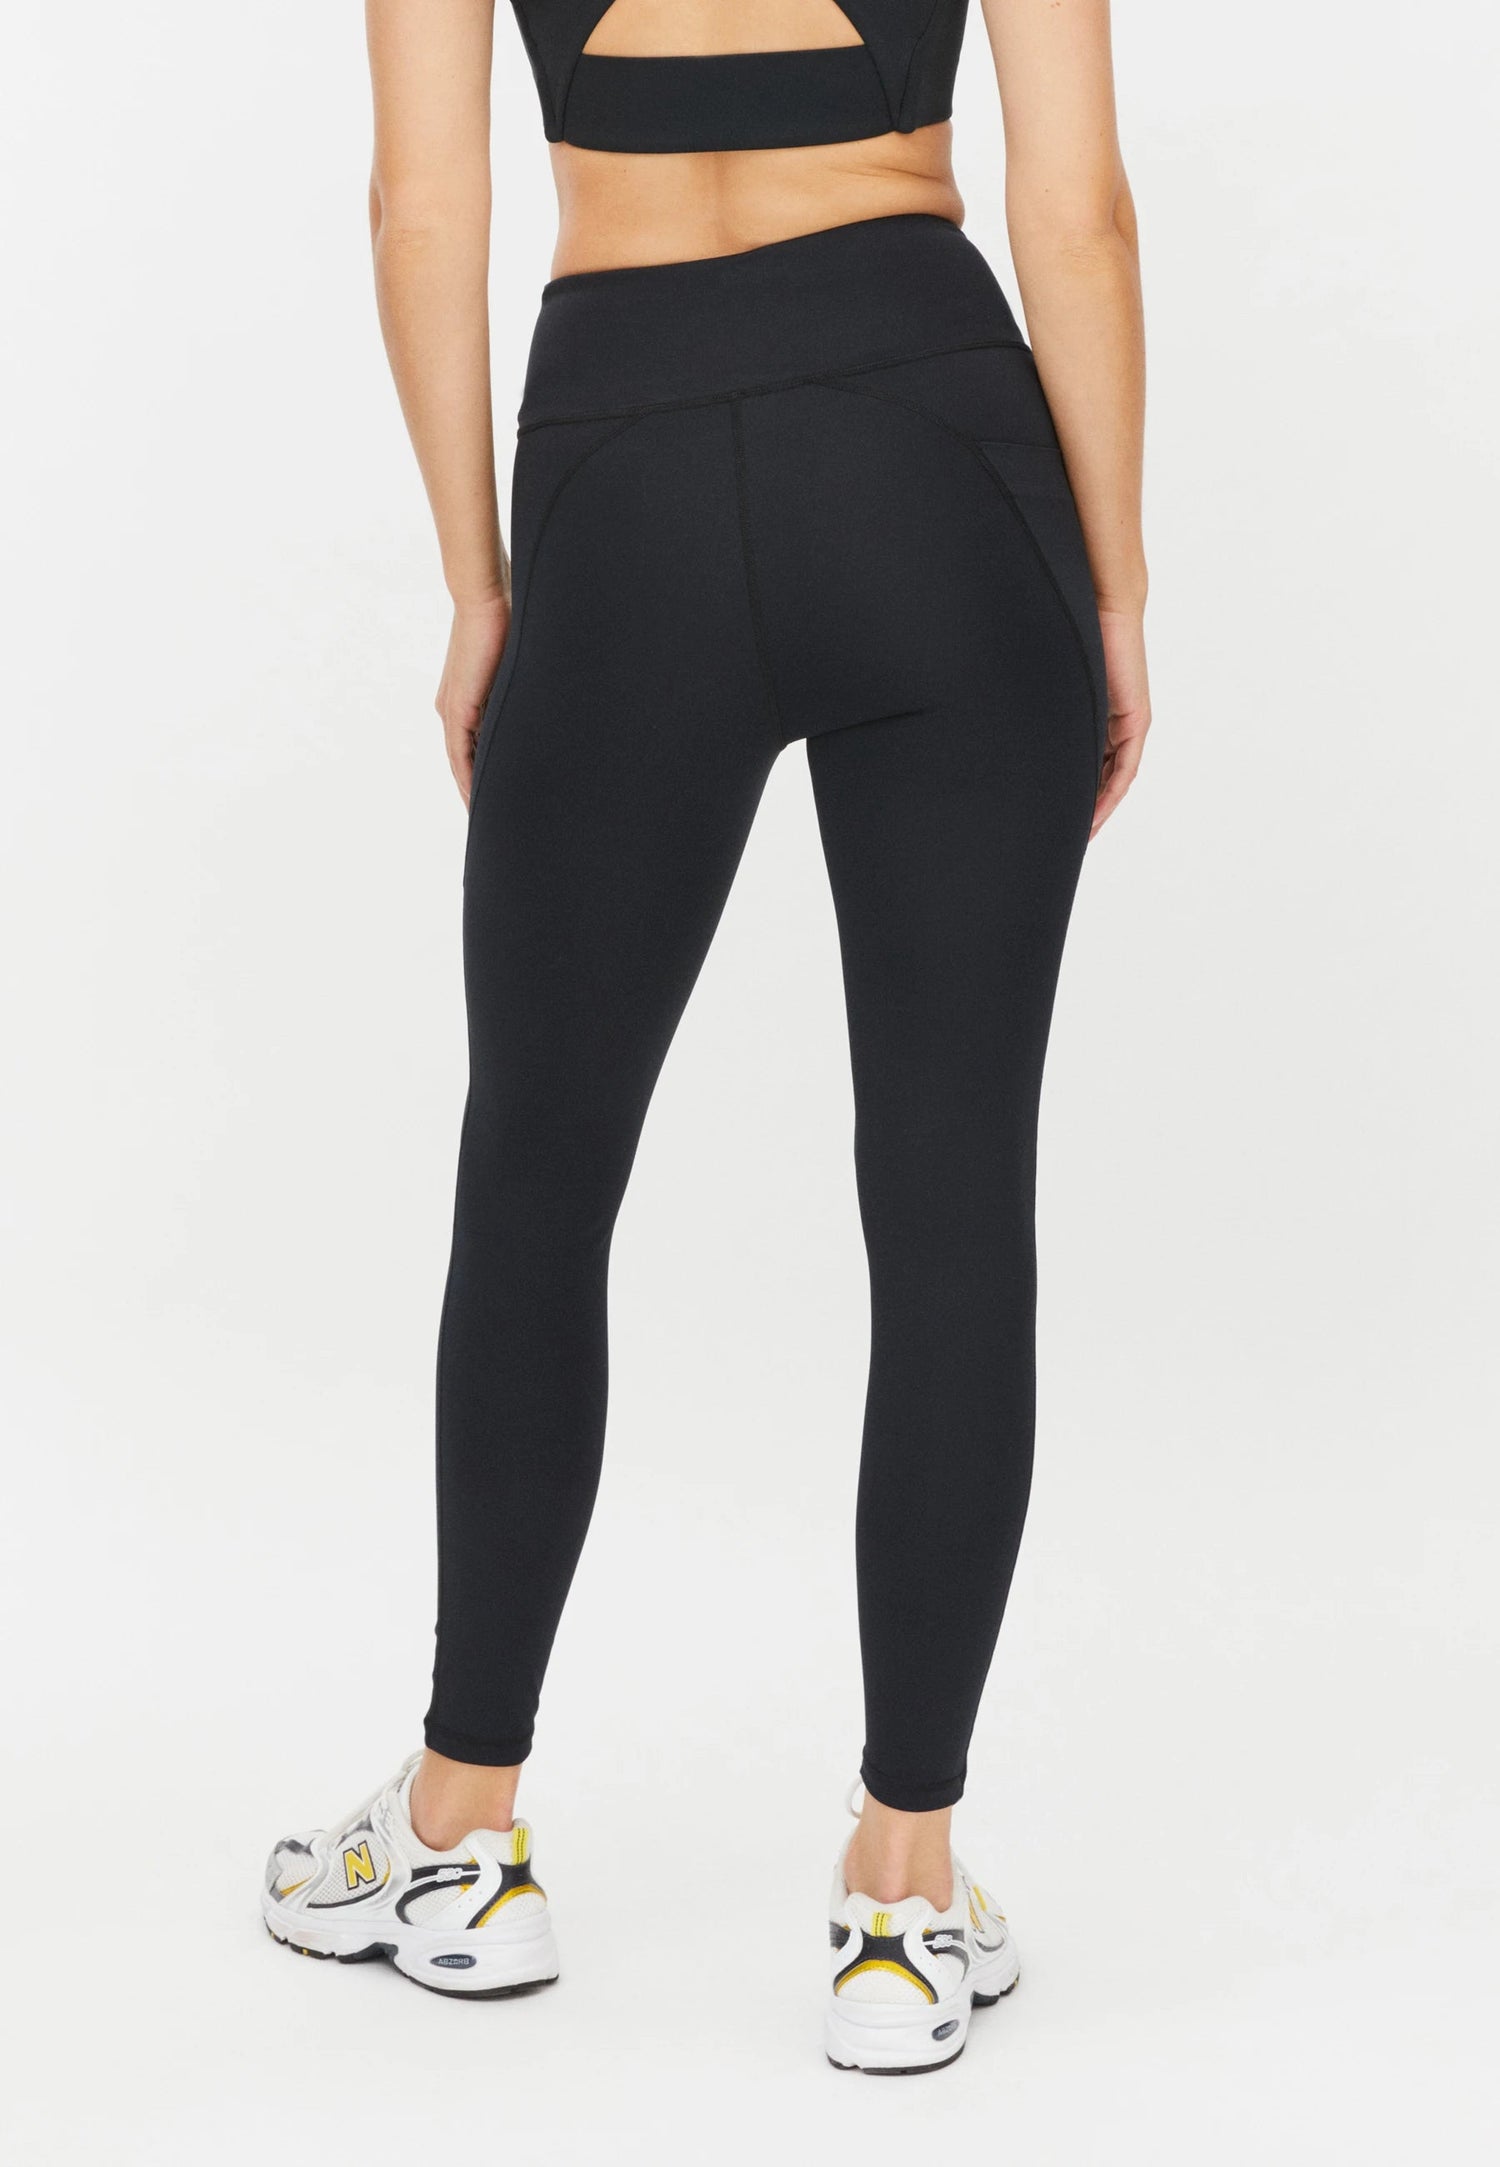 Röhnisch Flattering High Waist Tights - Recycled polyester Black Pants